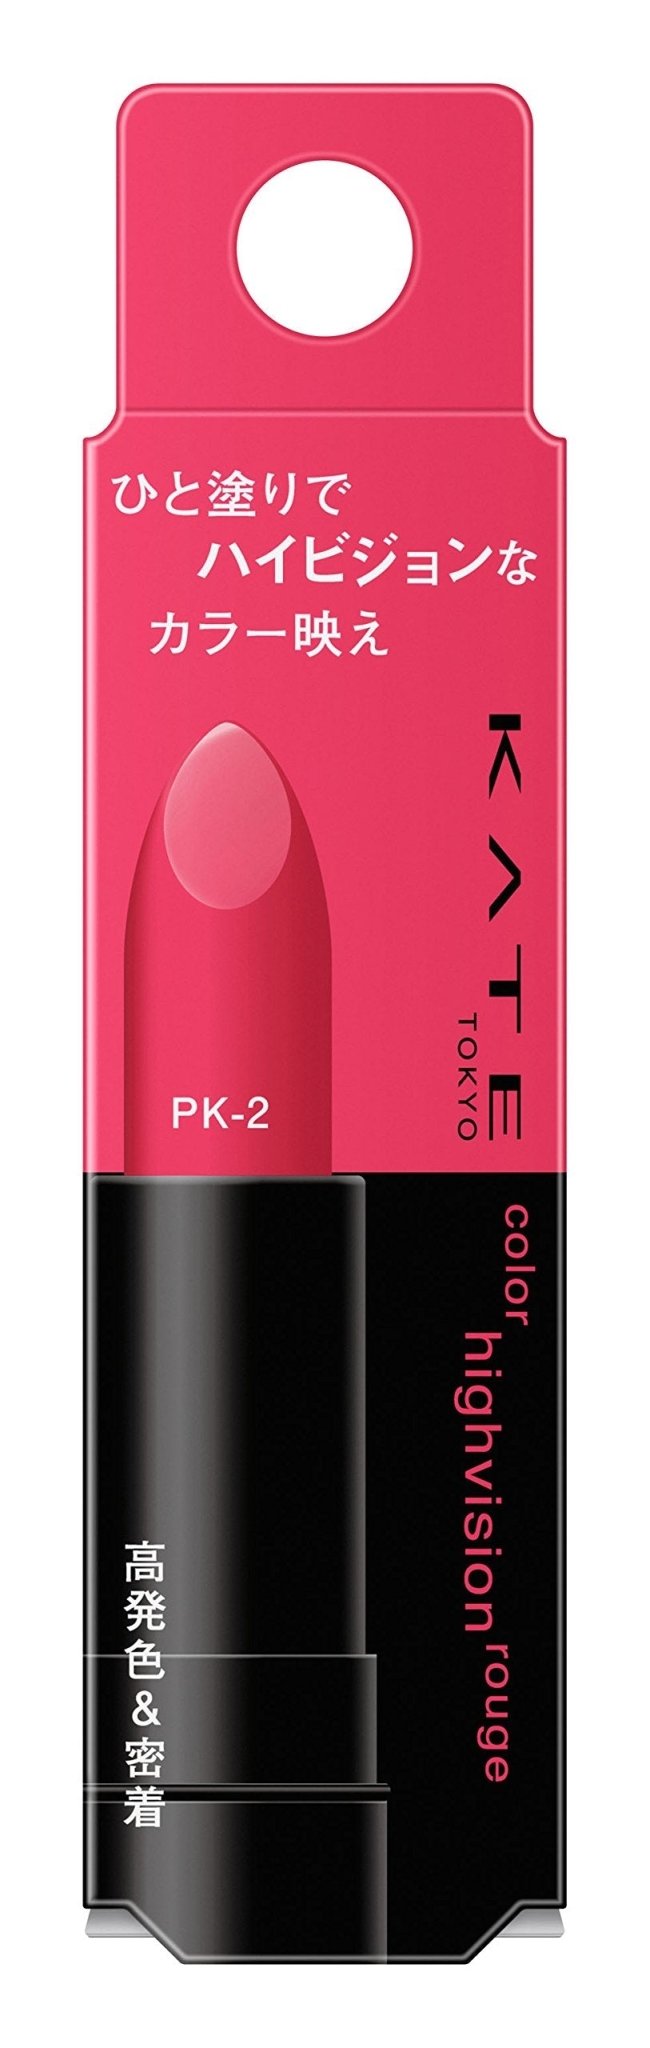 Kate Hi - Vision Rouge Lipstick in Rouge Color PK - 2 Long Lasting